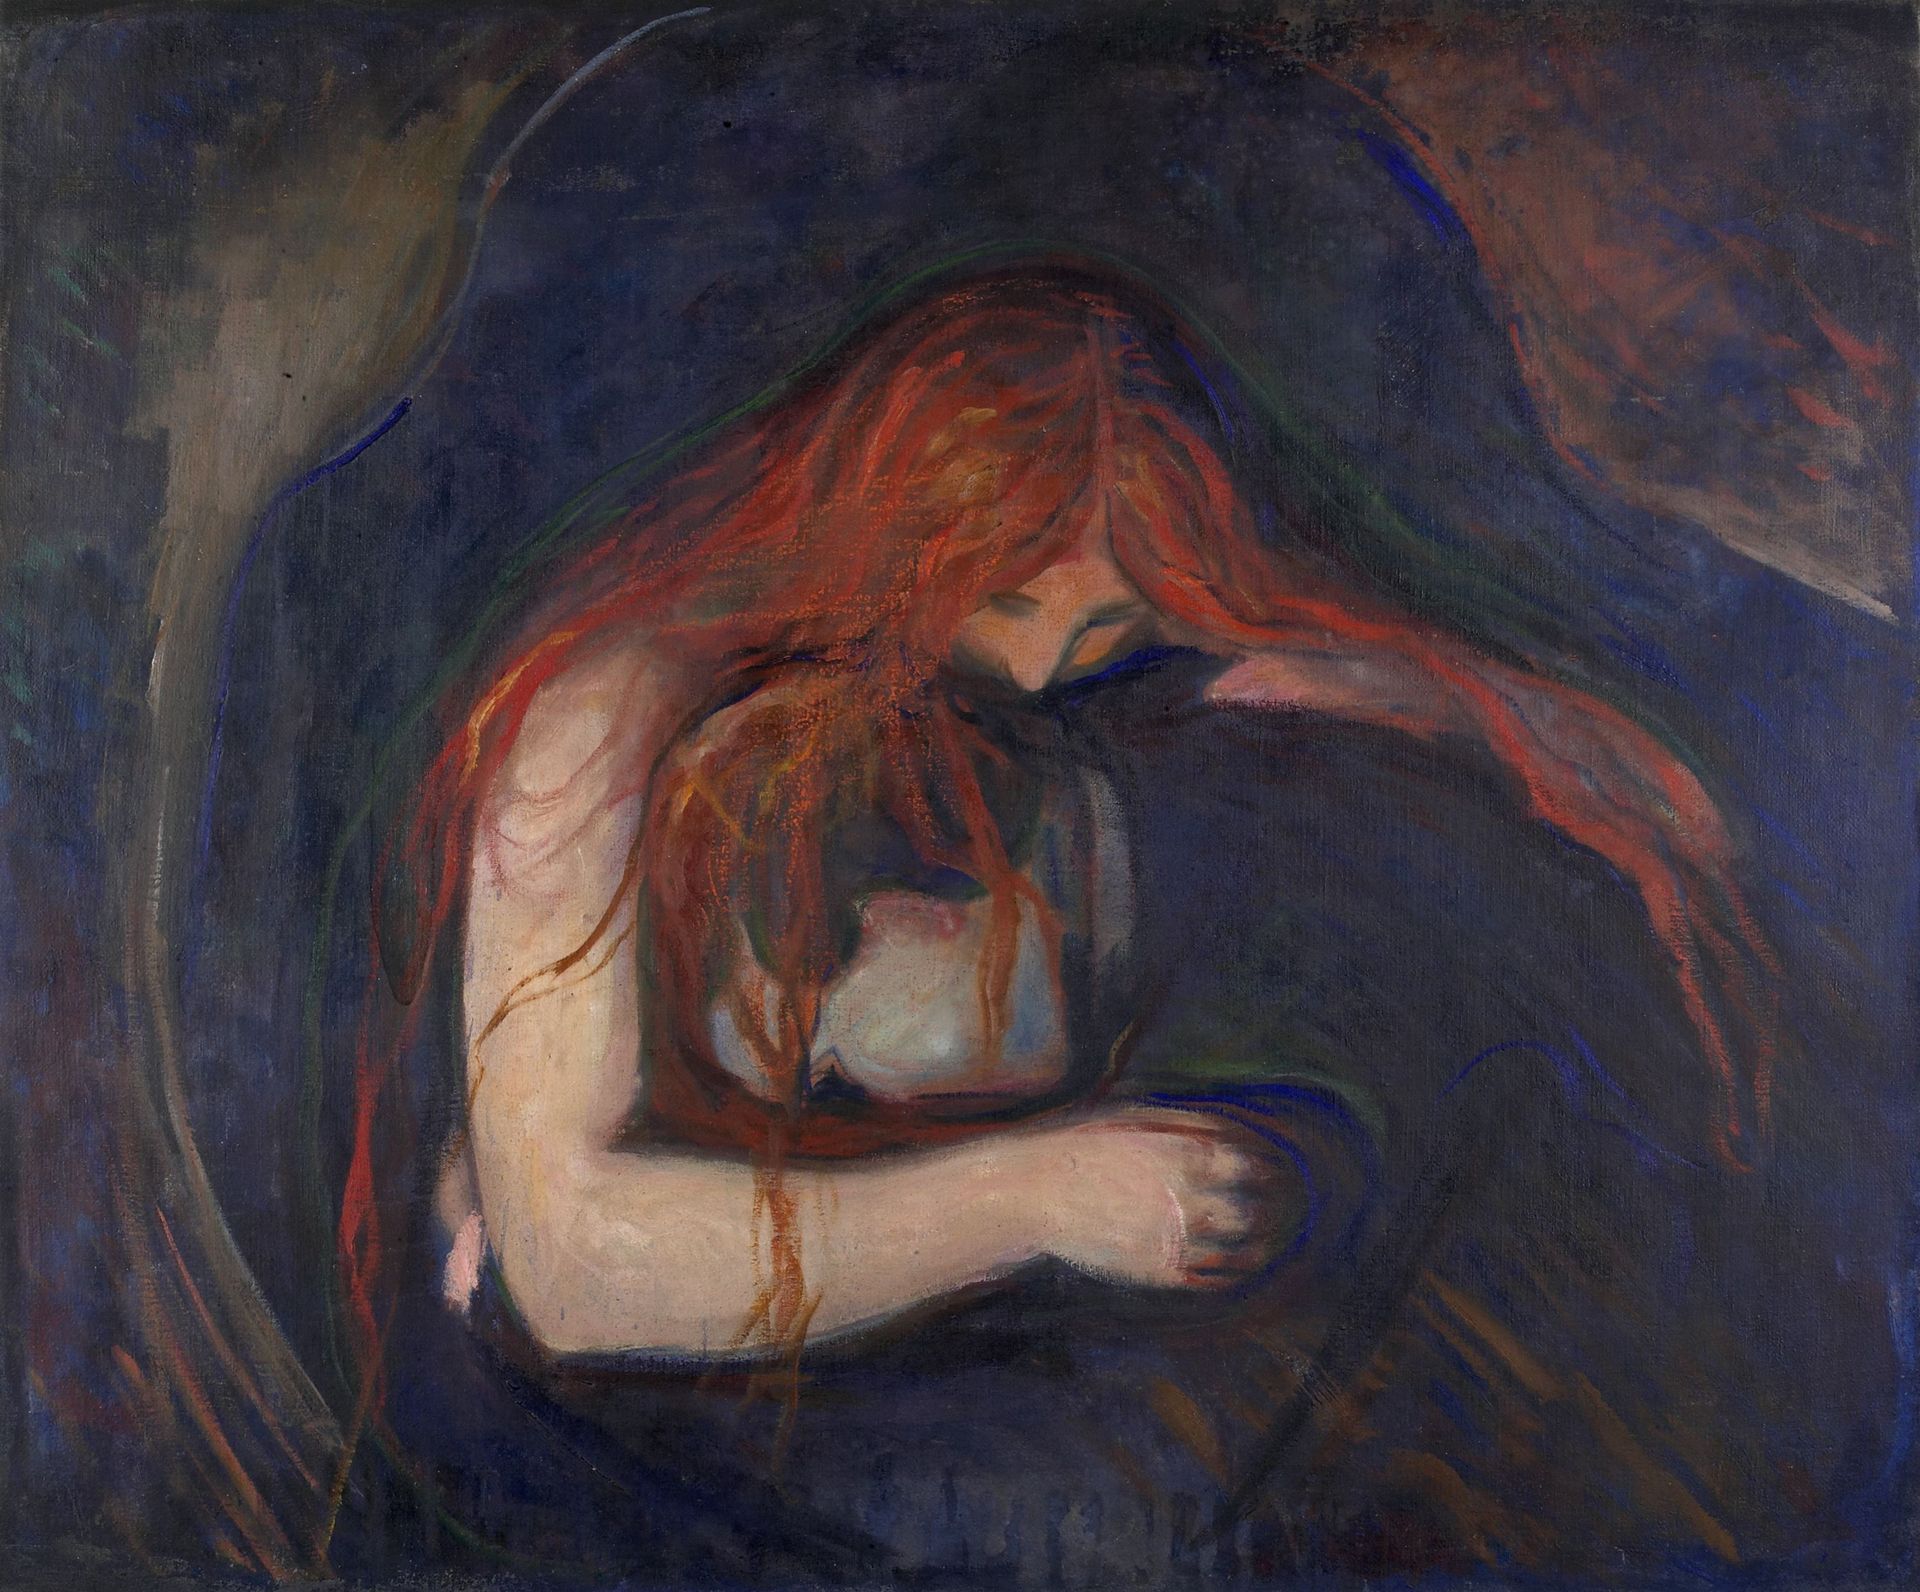 Le Vampire, Edvard Munch